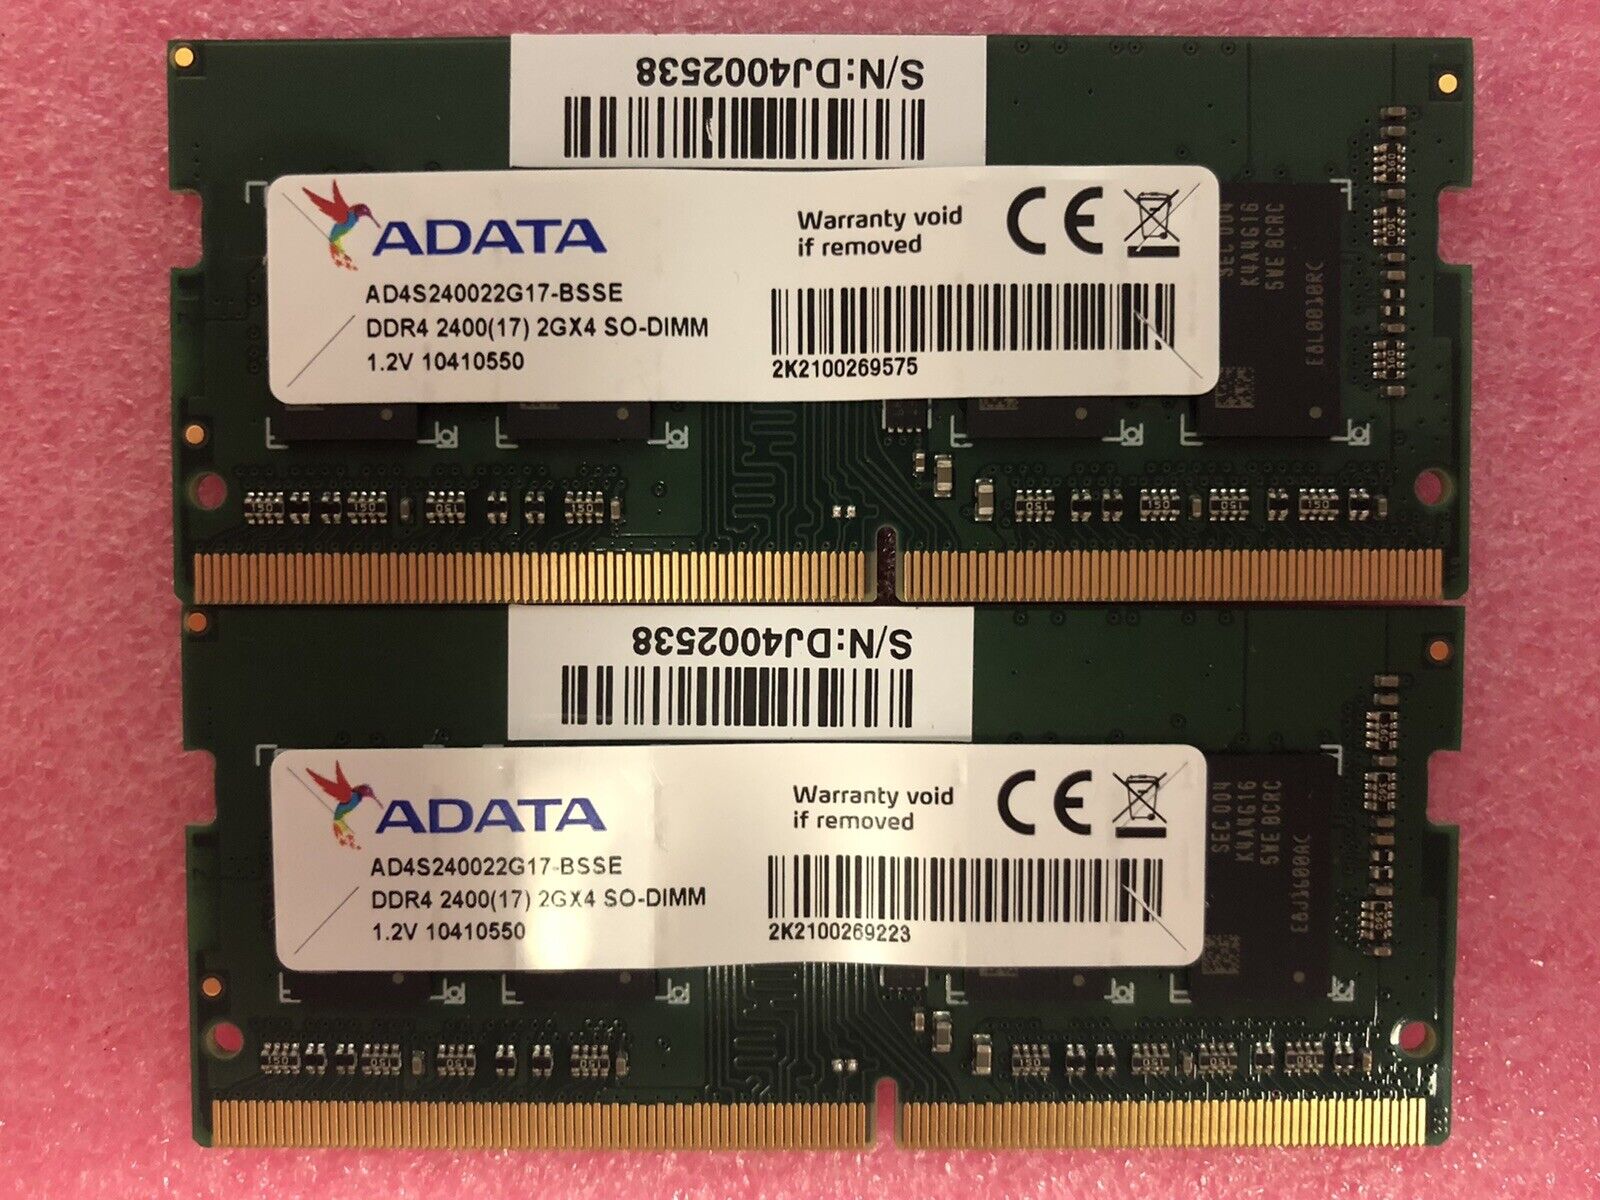 LOT OF 2--ADATA 2G RAM DDR4 2400 SO-DIMM 1.2 V AD4S240022G17-BSSE